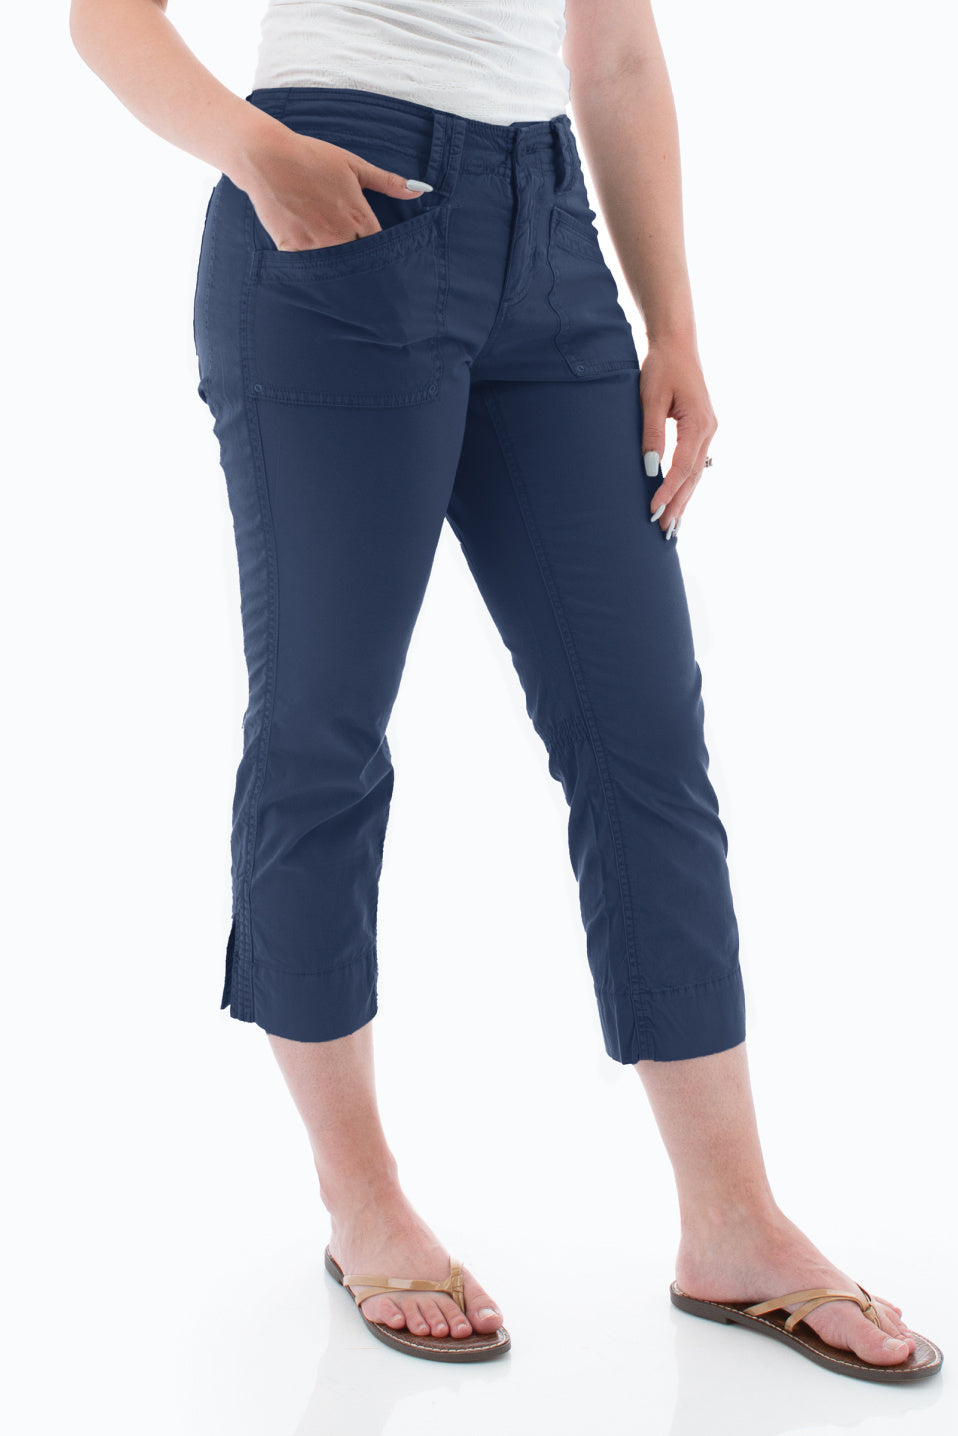 luvamia Womens Ripped Capri Jeans Slim Fit Skinny Stretch Destroyed Denim  Capri Pant for Women Size L Fit Size 12 Size 14 